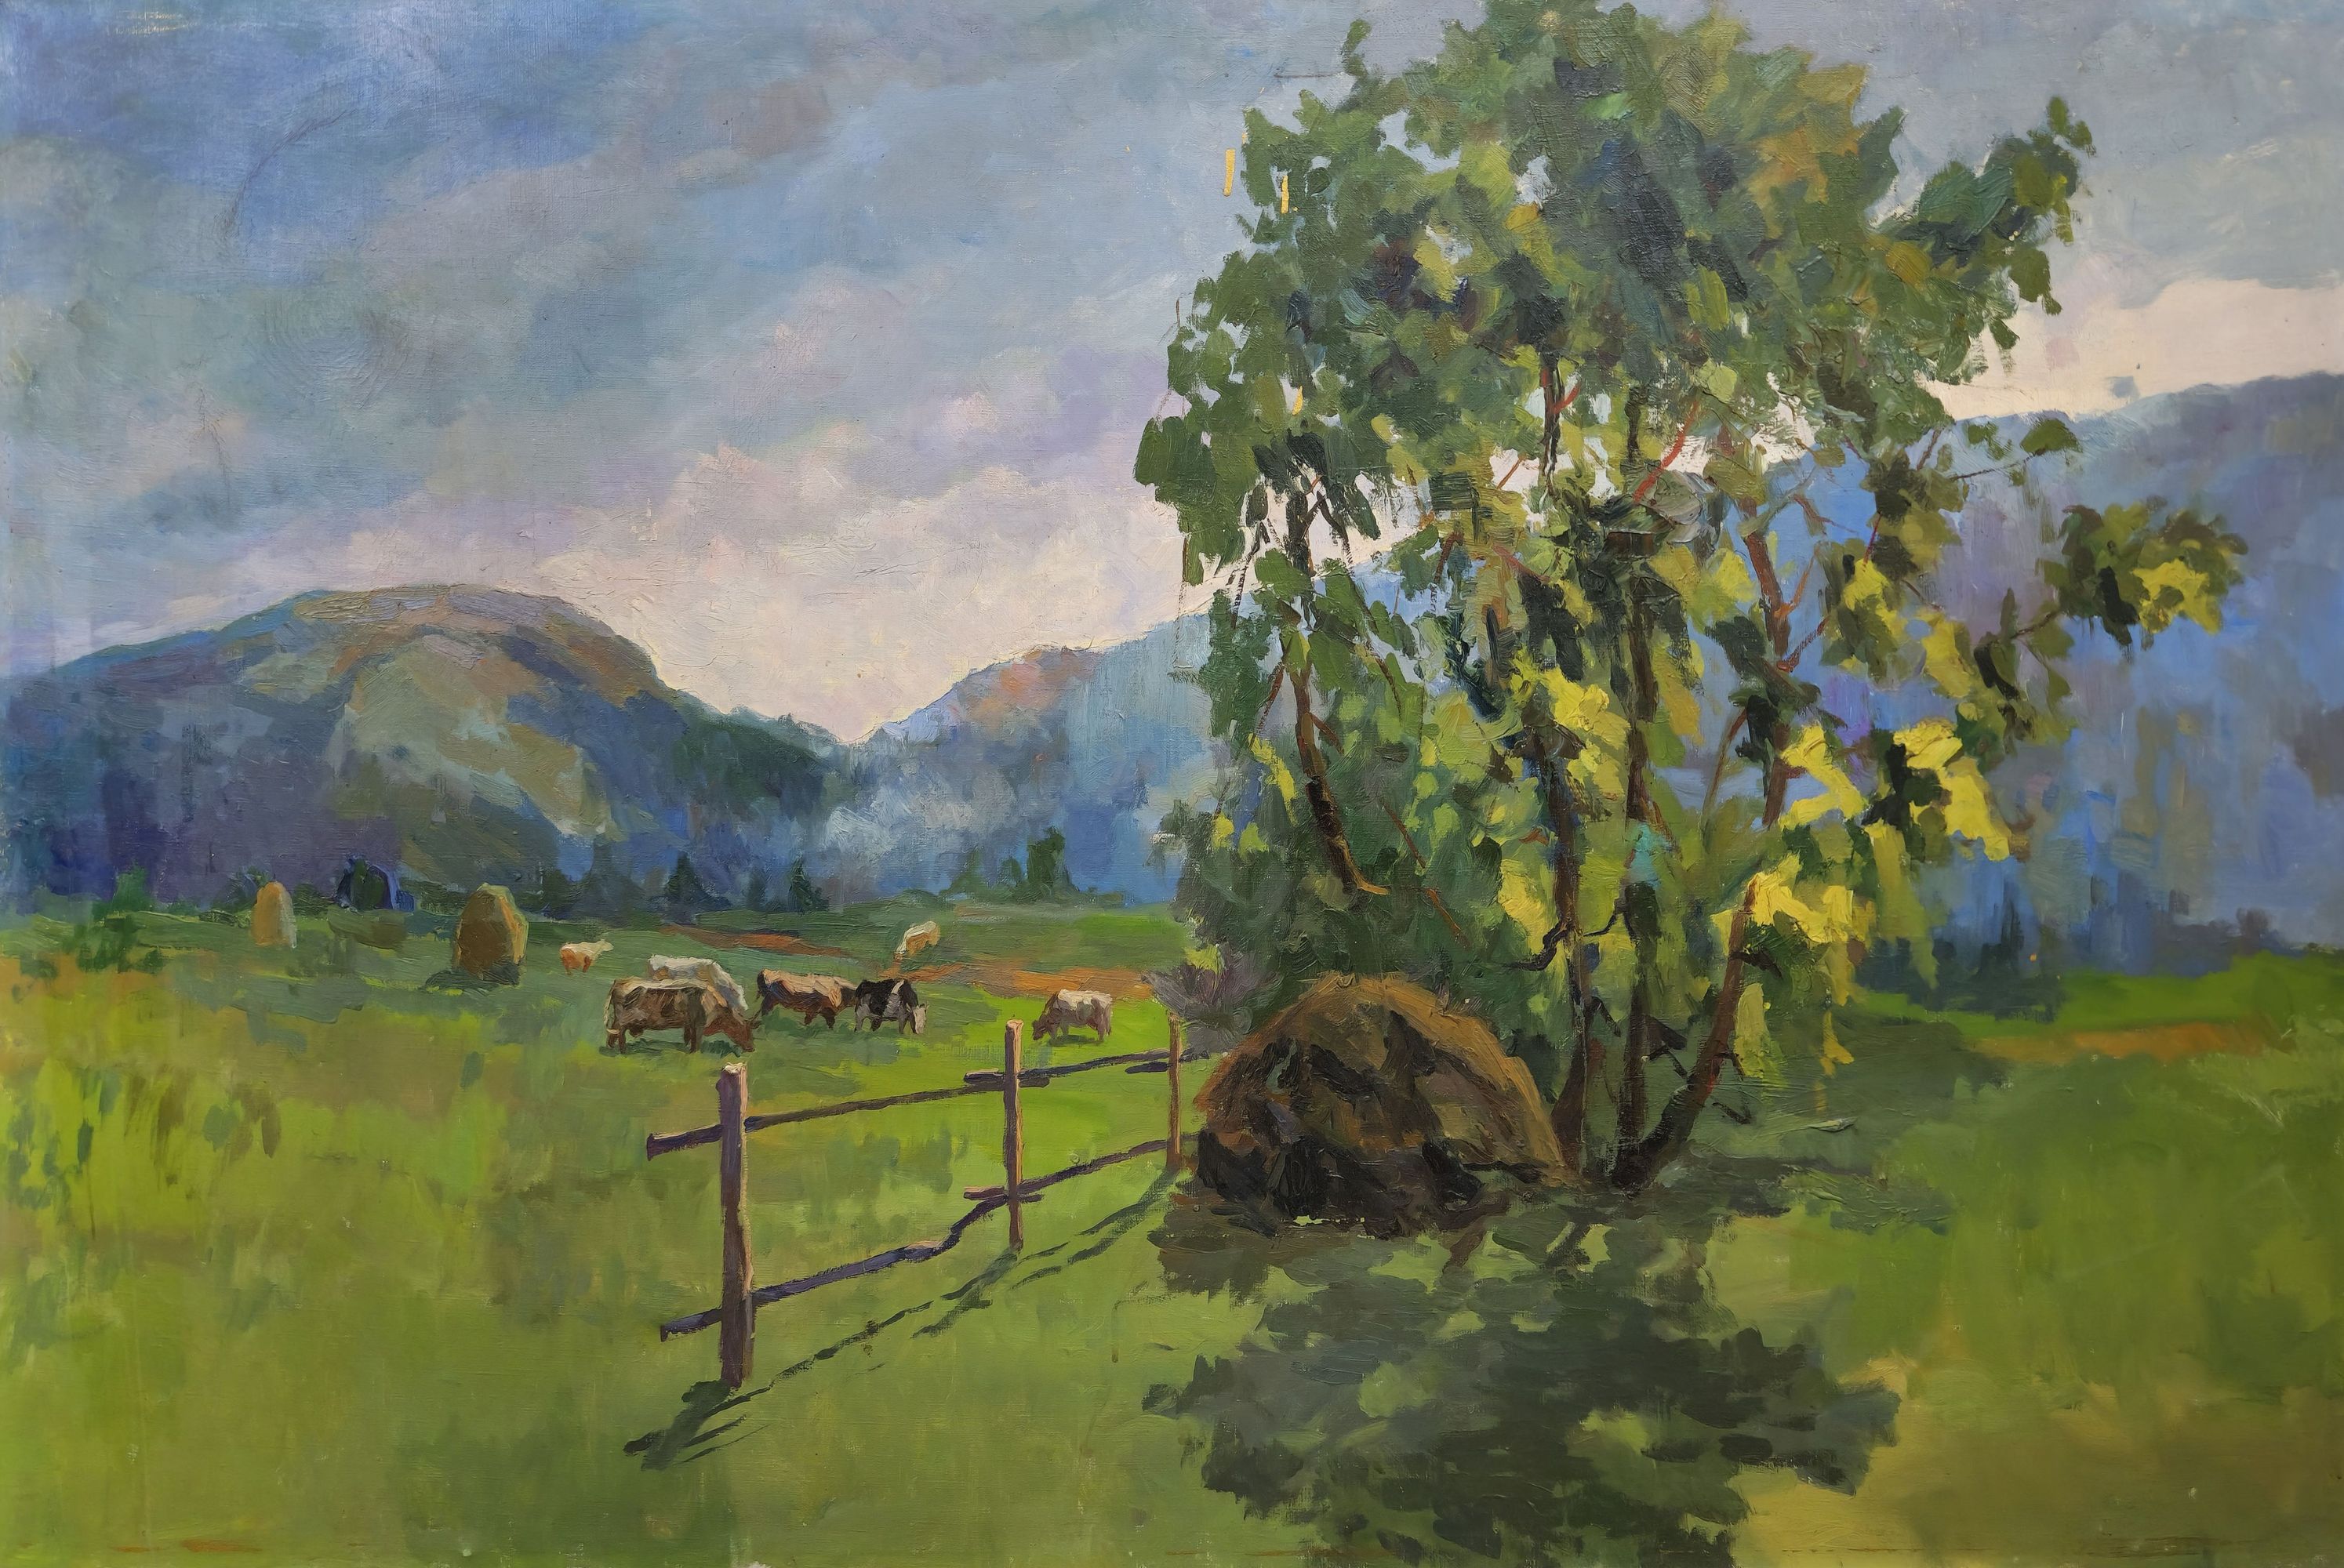 "The pasture"